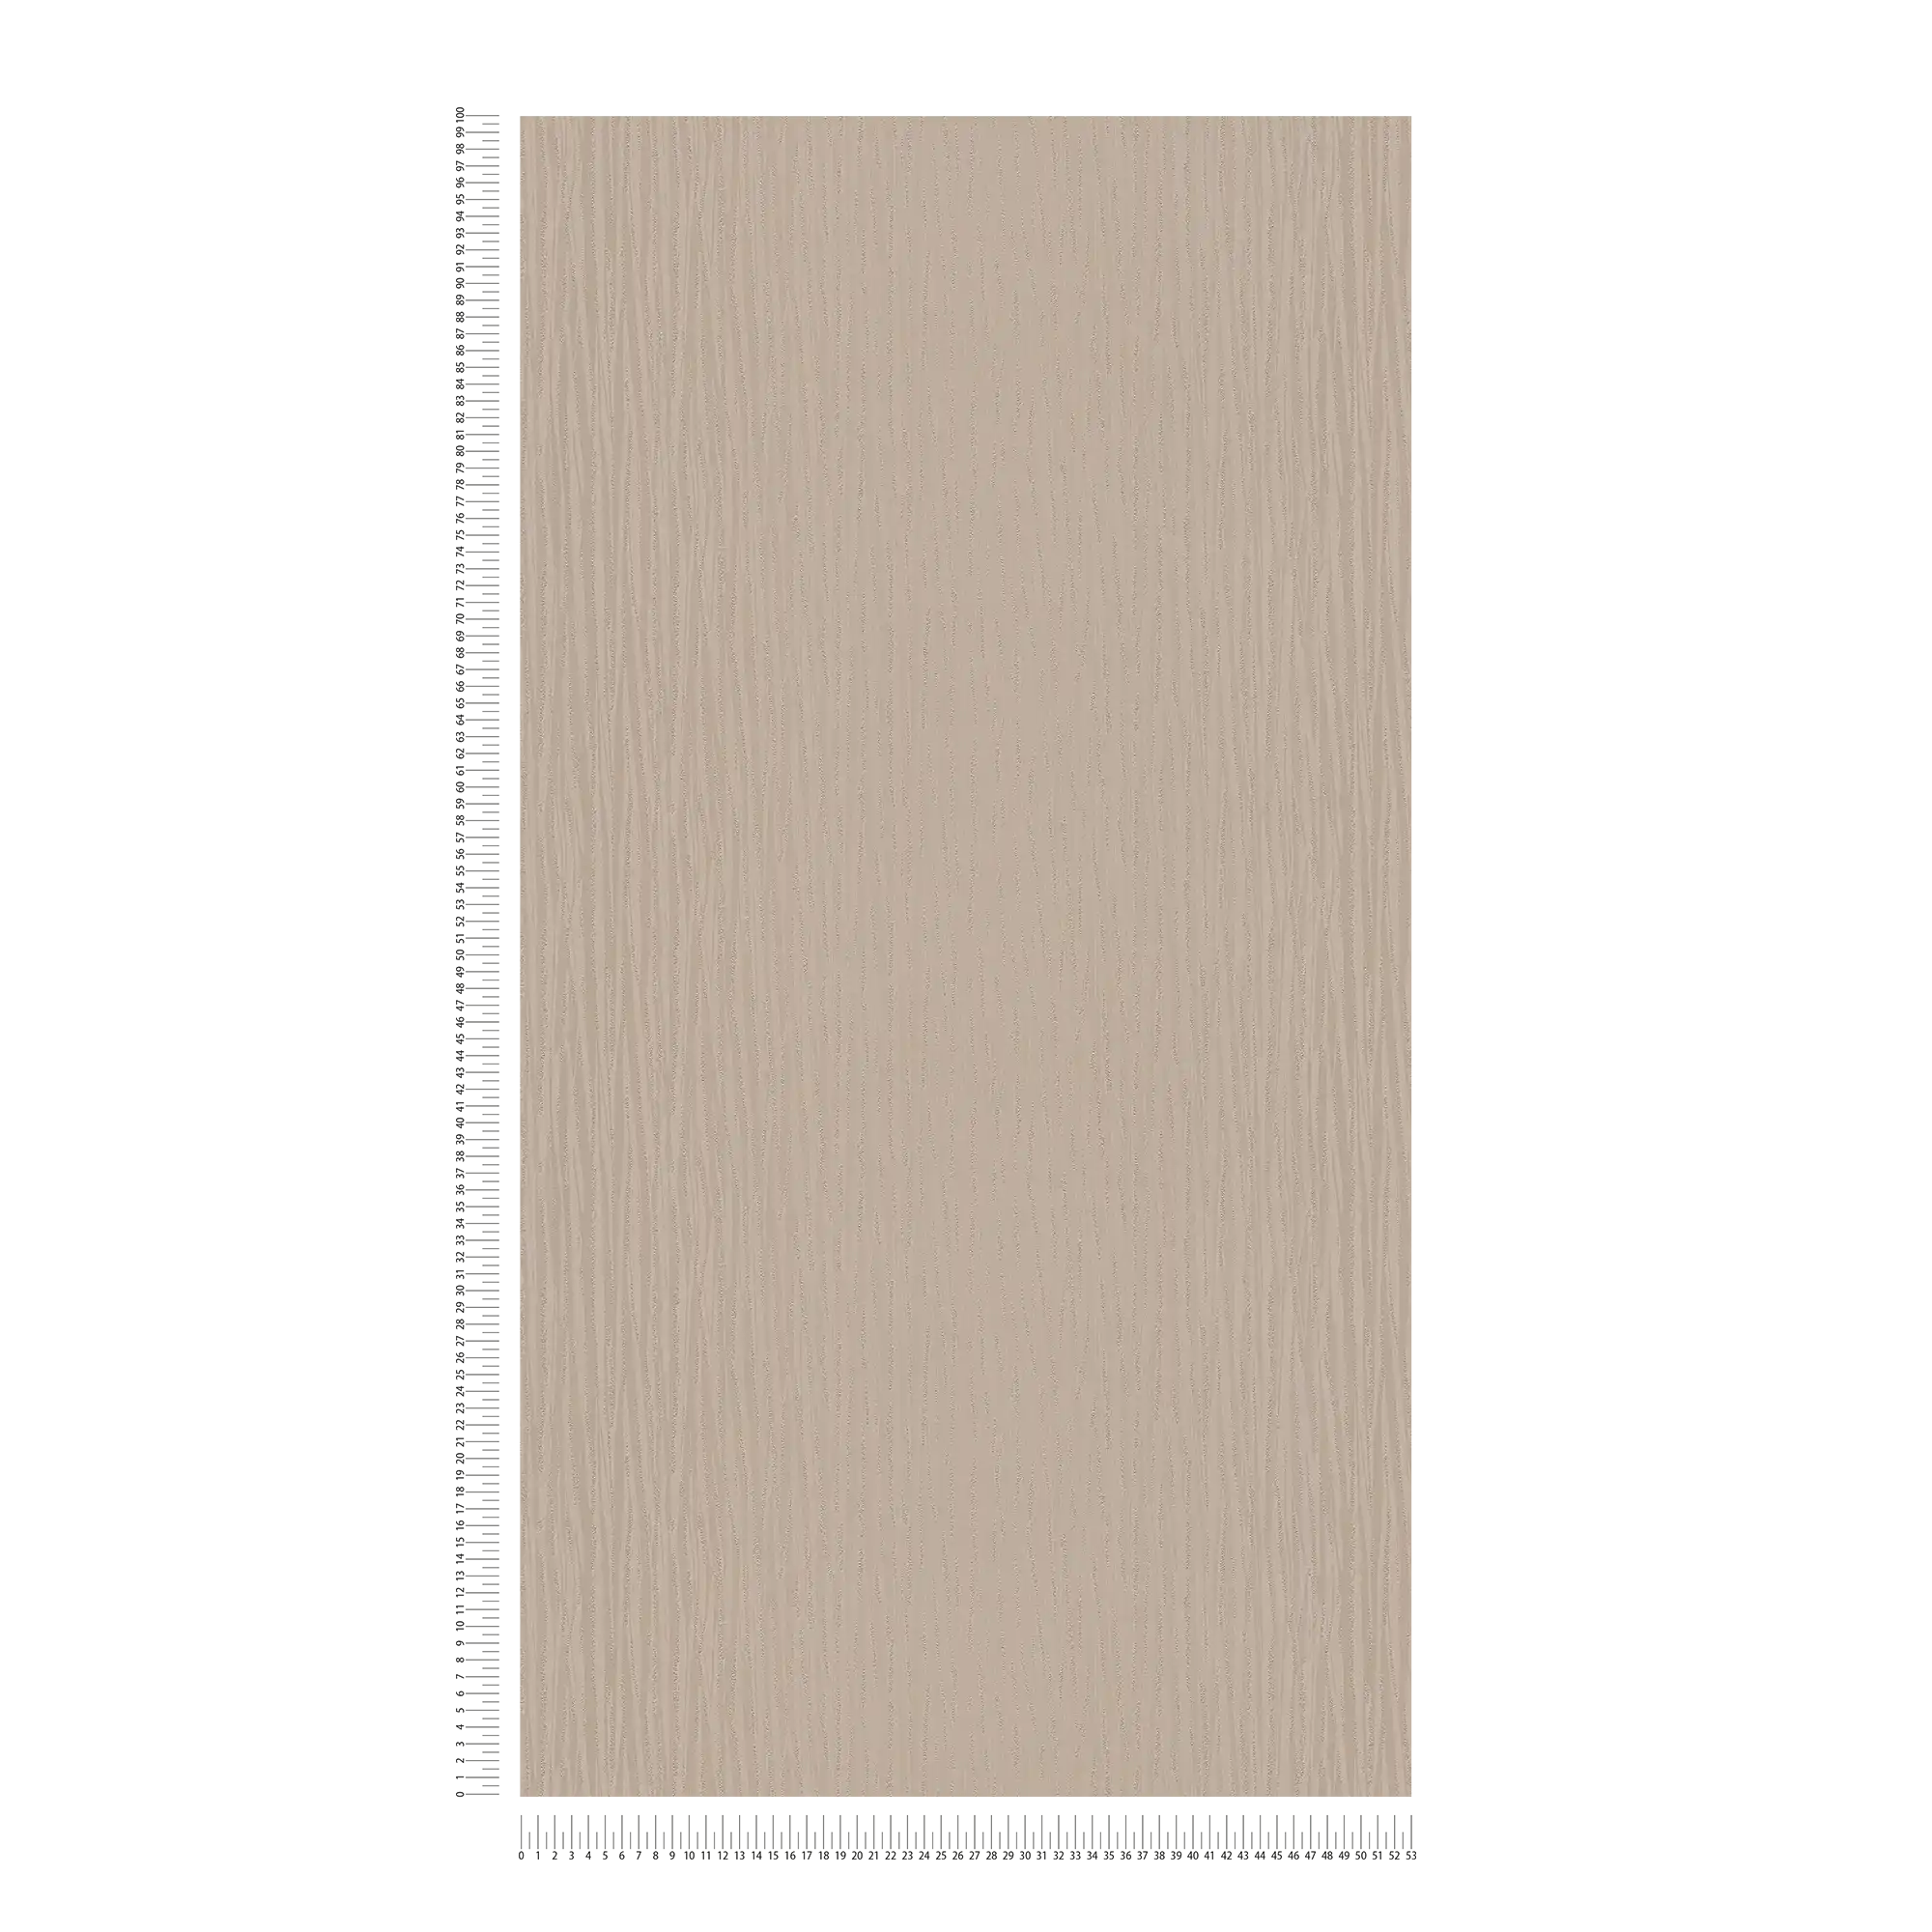             Plain wallpaper beige with metallic luster & hatch design
        